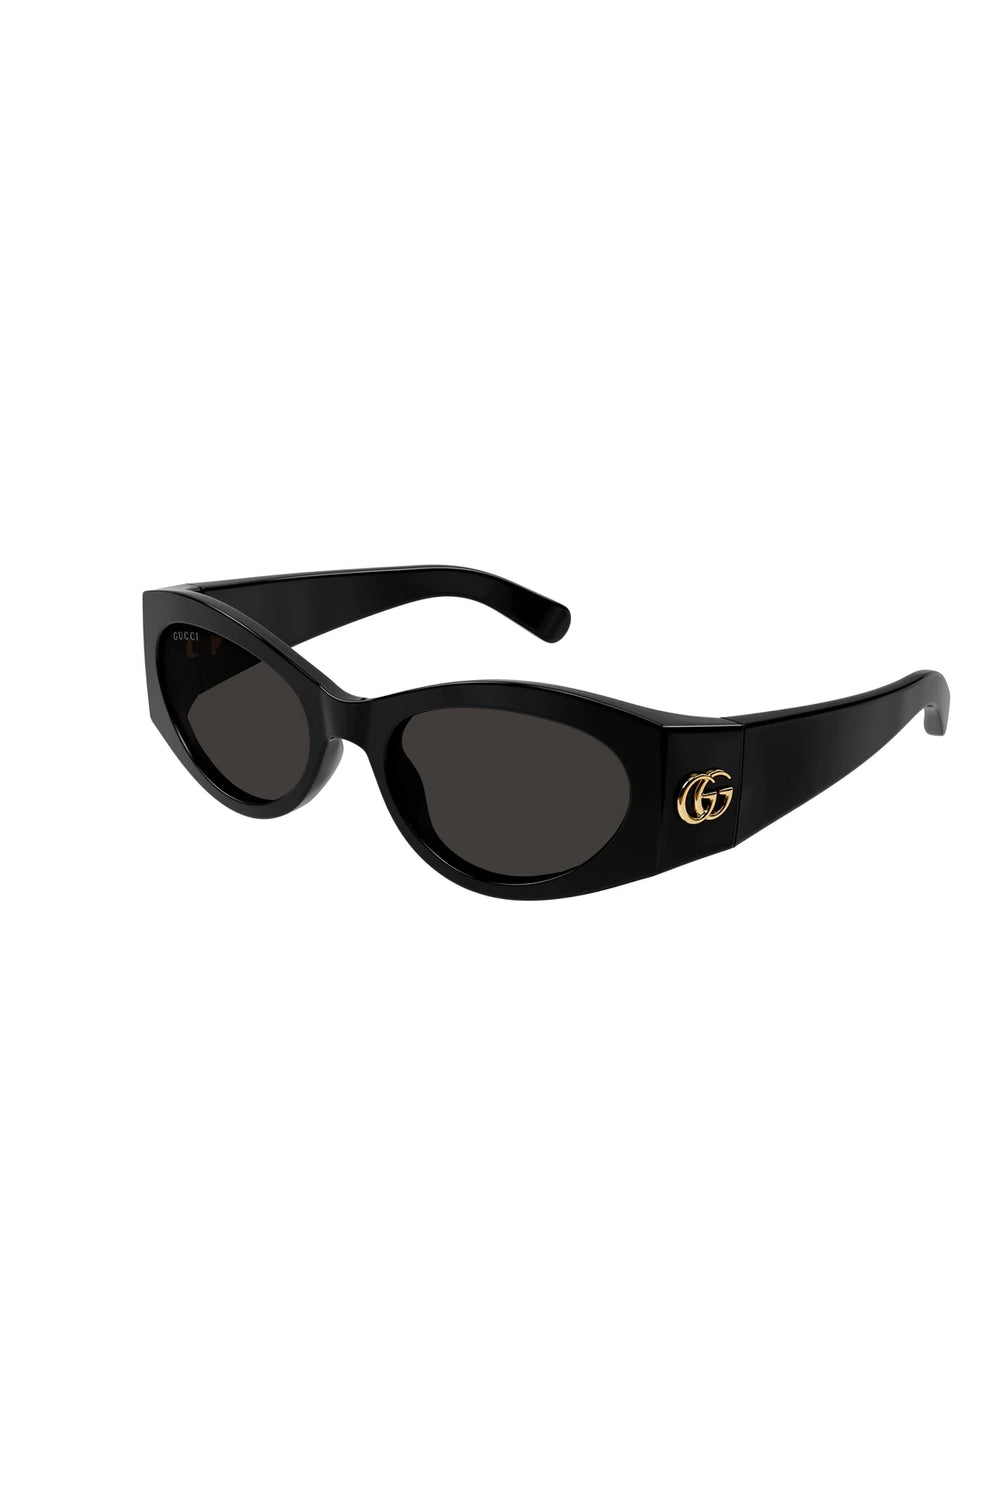 Gucci Cat-eye Round Sunglasses Black GG1401S001